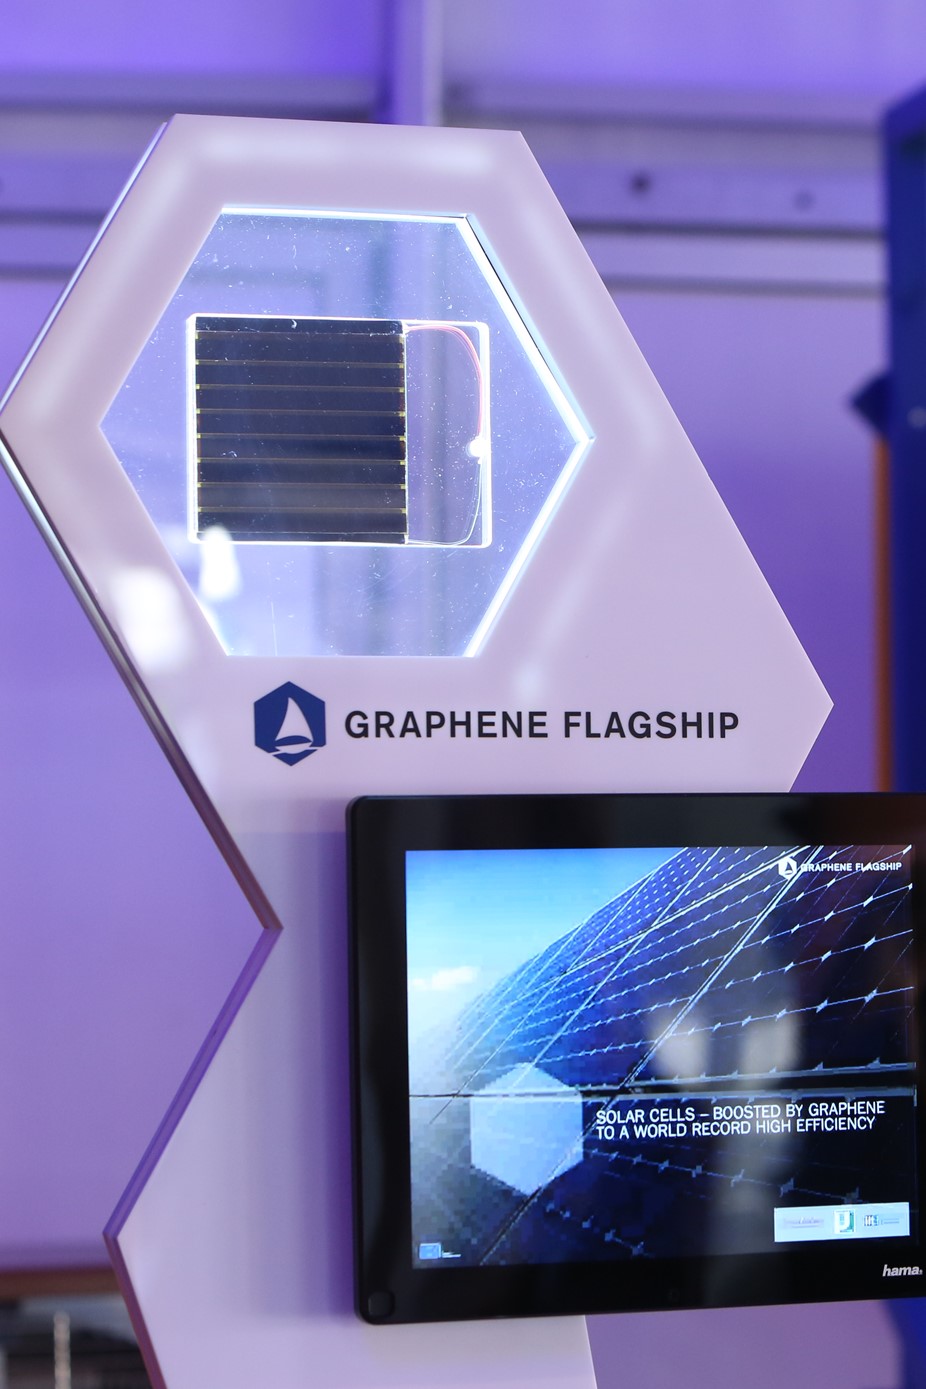 Information about a graphene solar panel at the Tallinn Digital Summit 2017